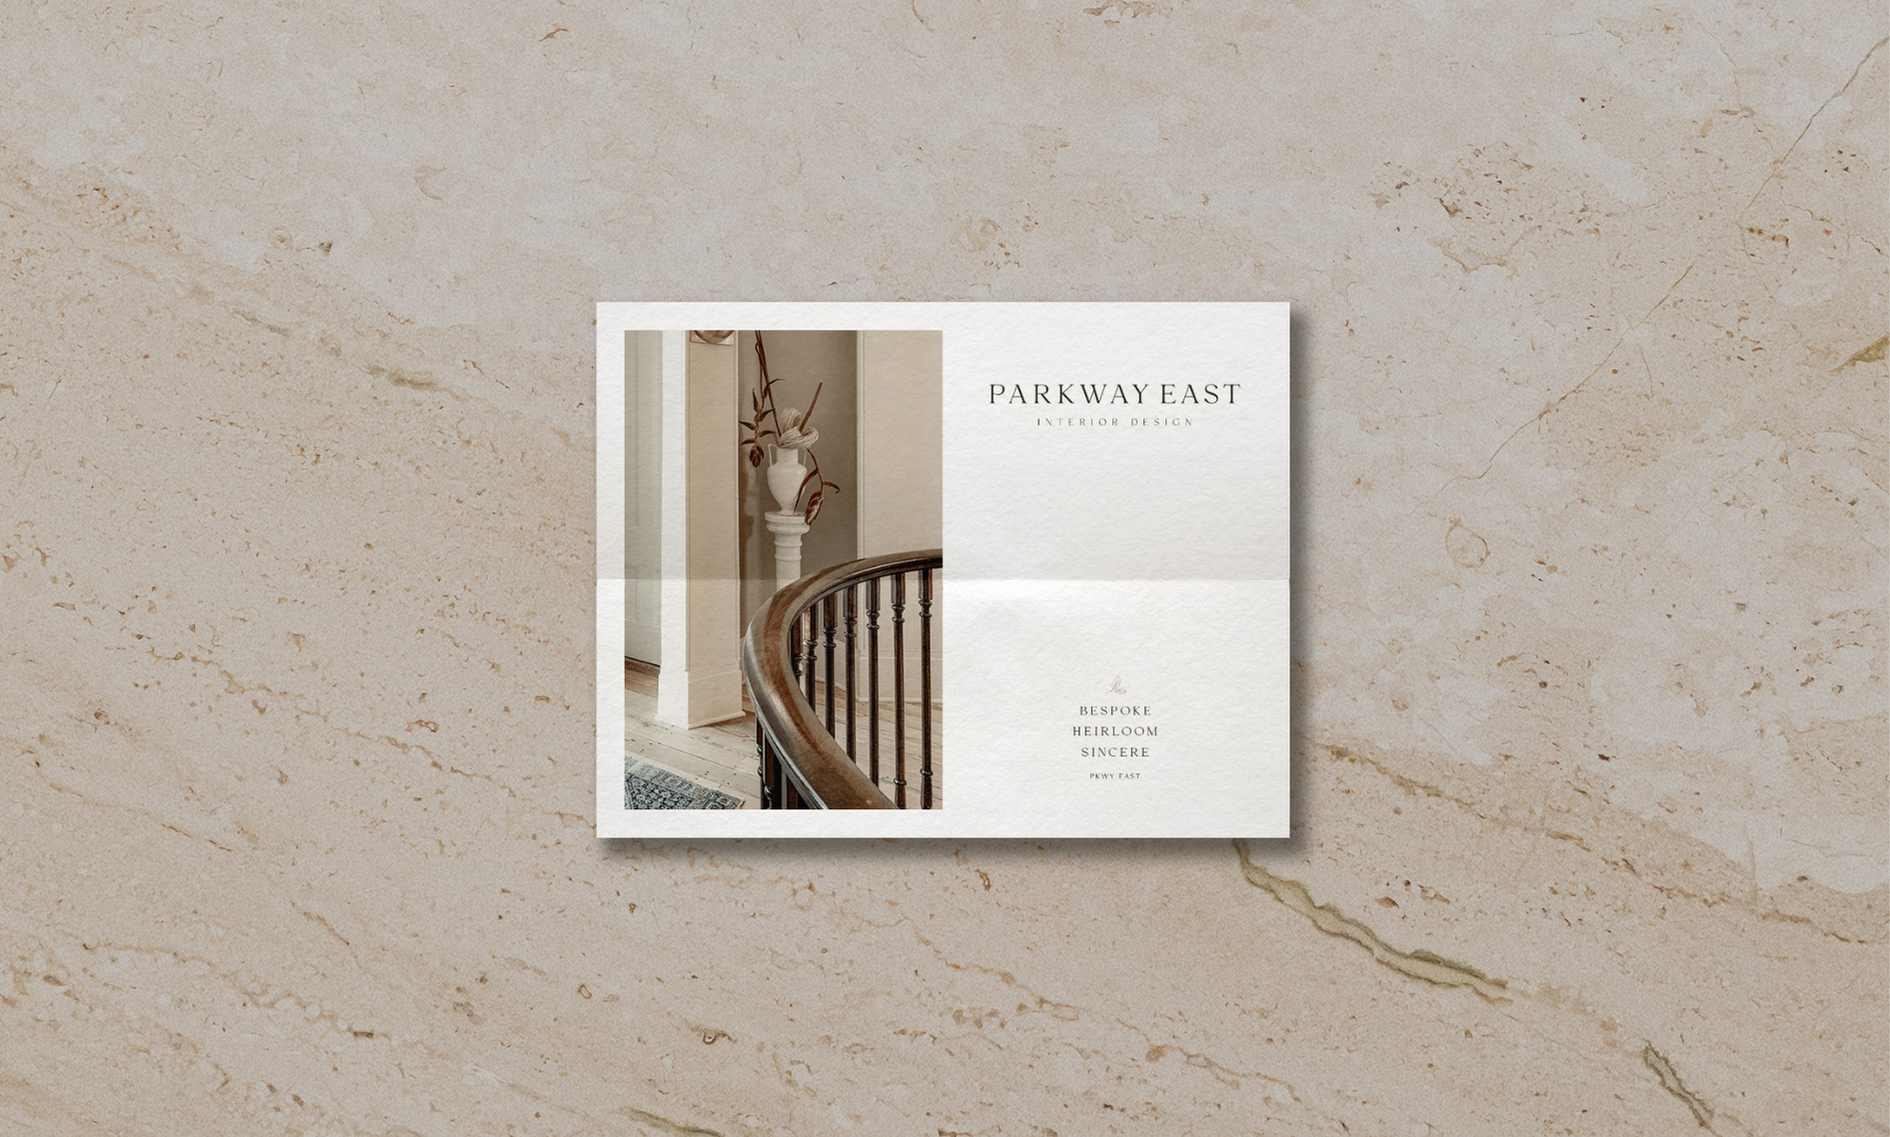 Parkway East Design - Classic Interior Design Brand by Sarah Ann Design